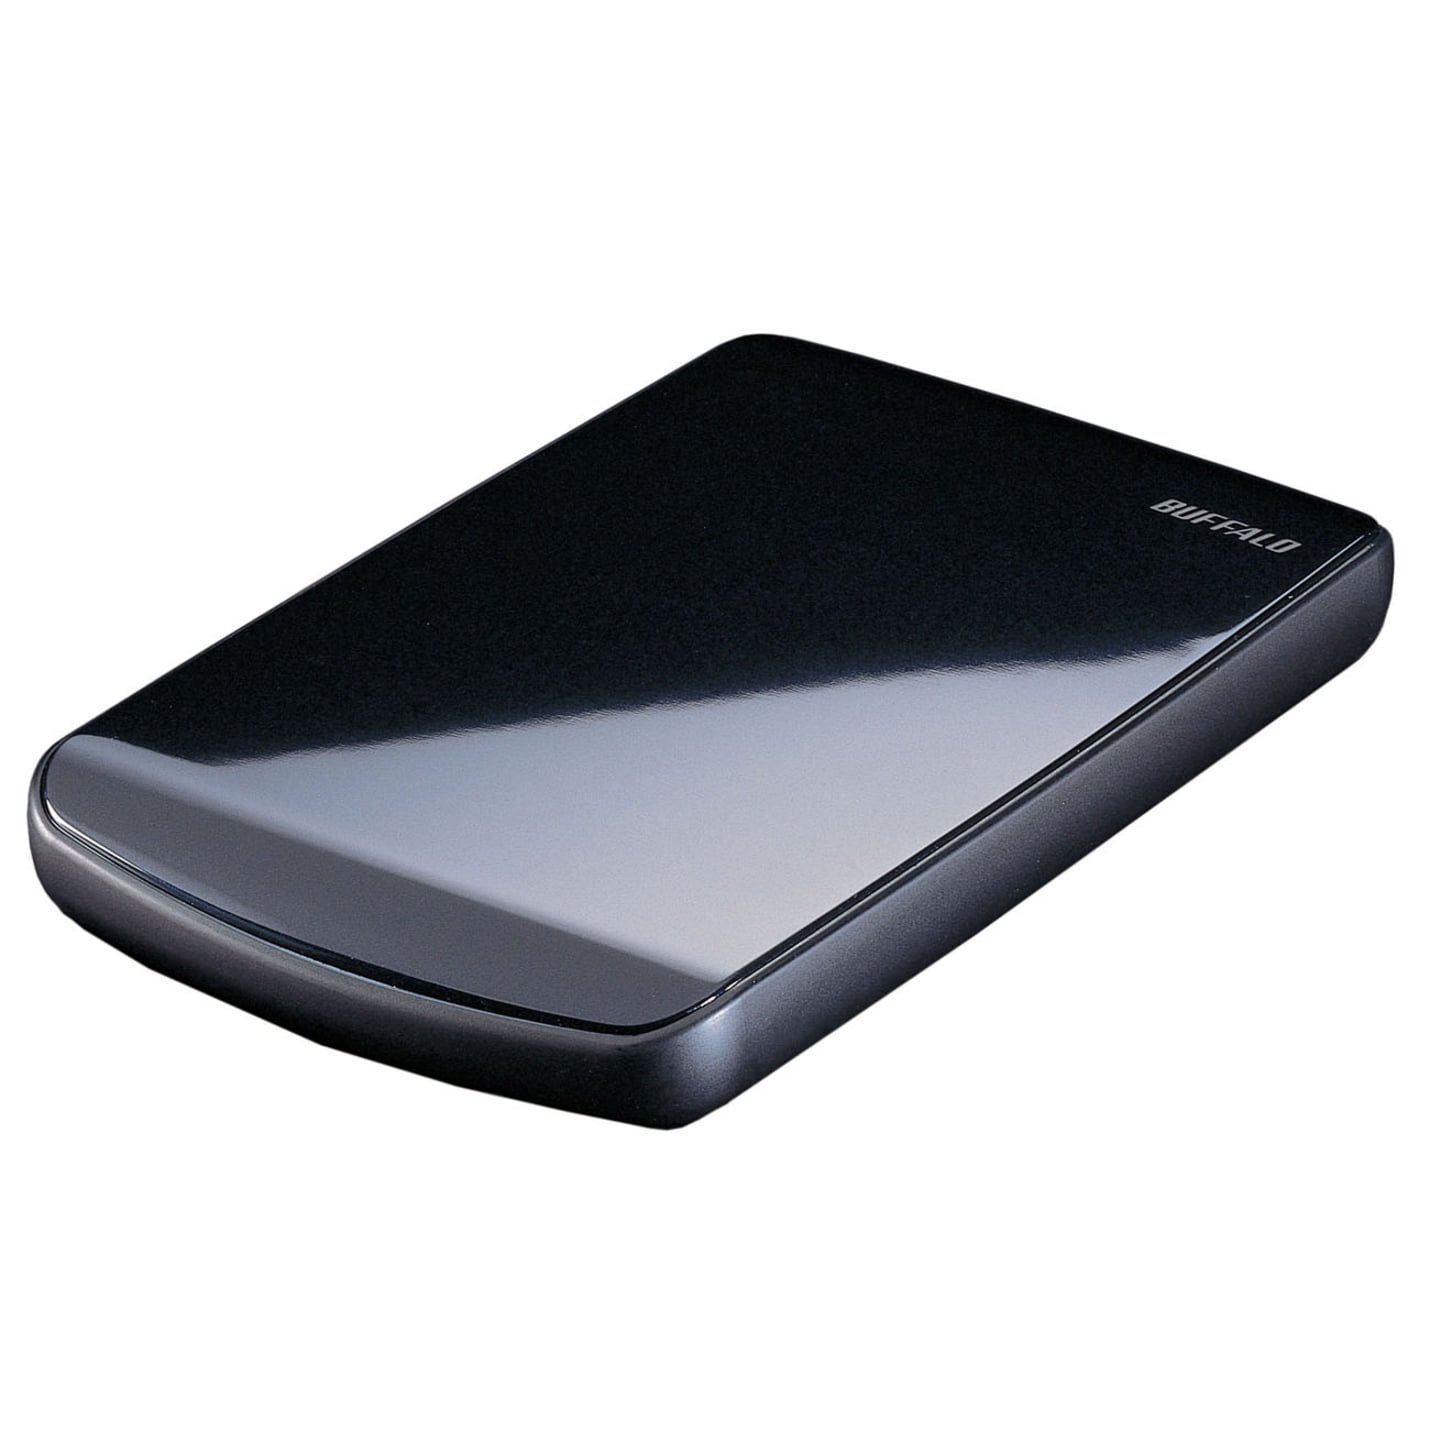 MiniStation Lite HD-PEU2 320 GB Hard Drive, 2.5" External, Crystal Black - Walmart.com